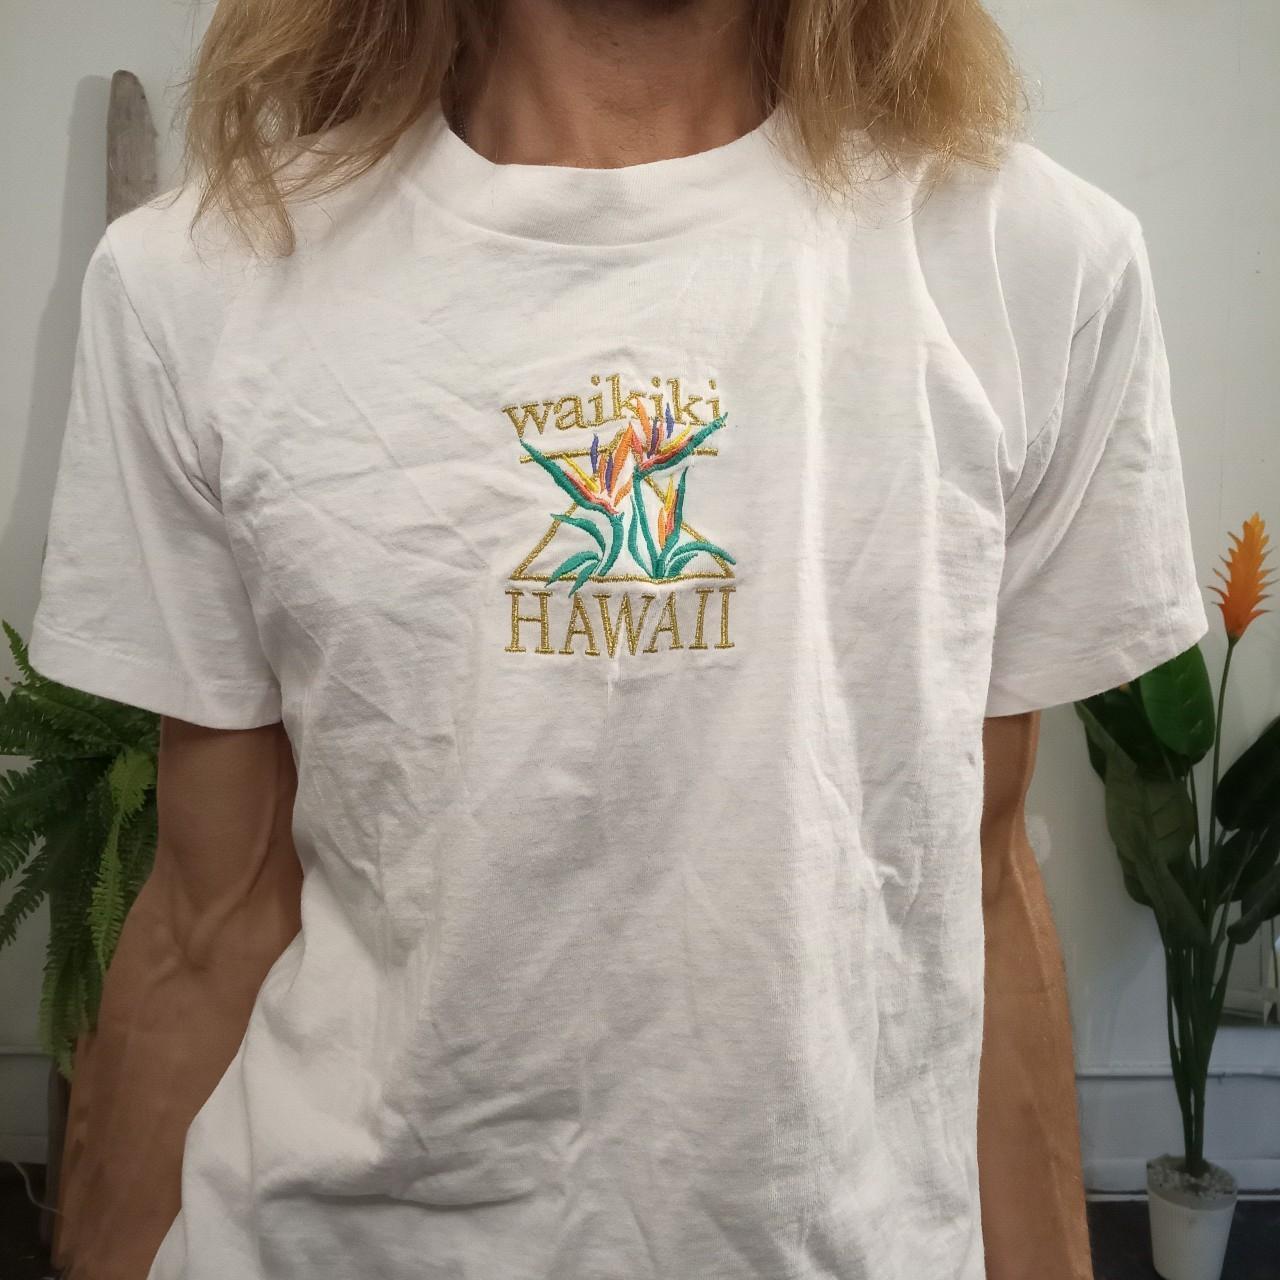 Vintage Waikiki t-shirt, great embroidery....